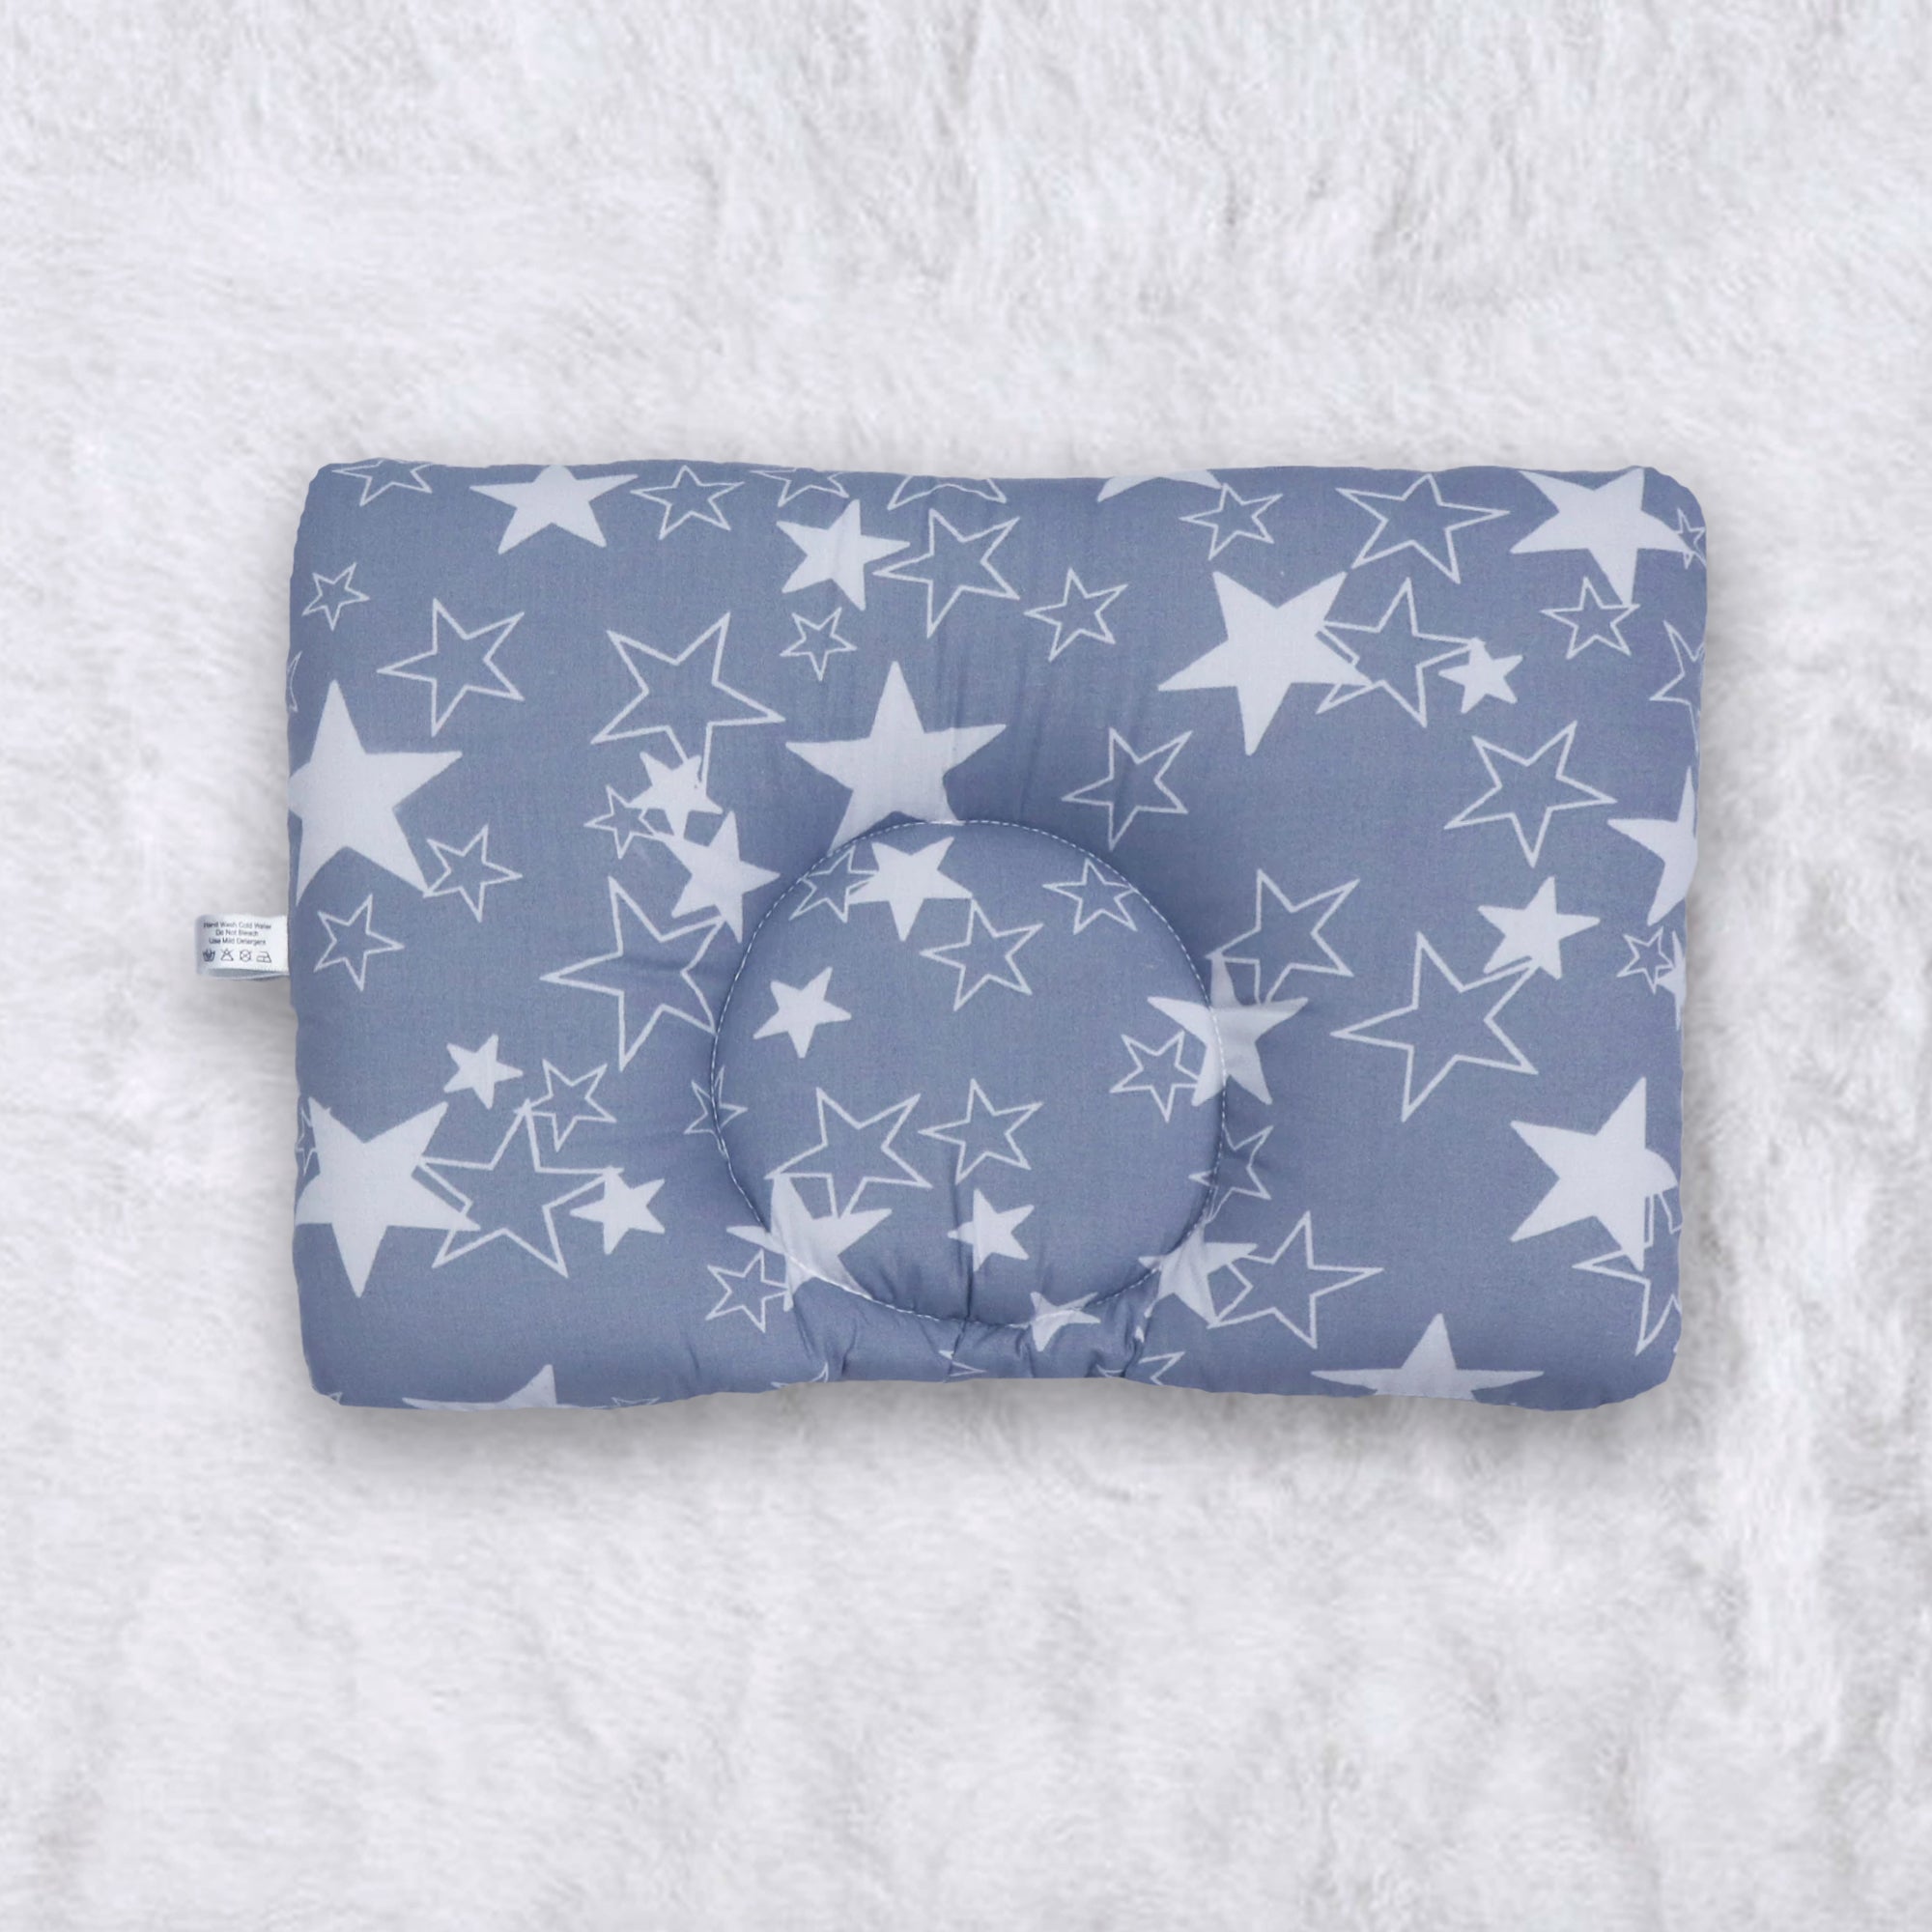 Baby Head Pillow (Star Design) - Ashtonbee